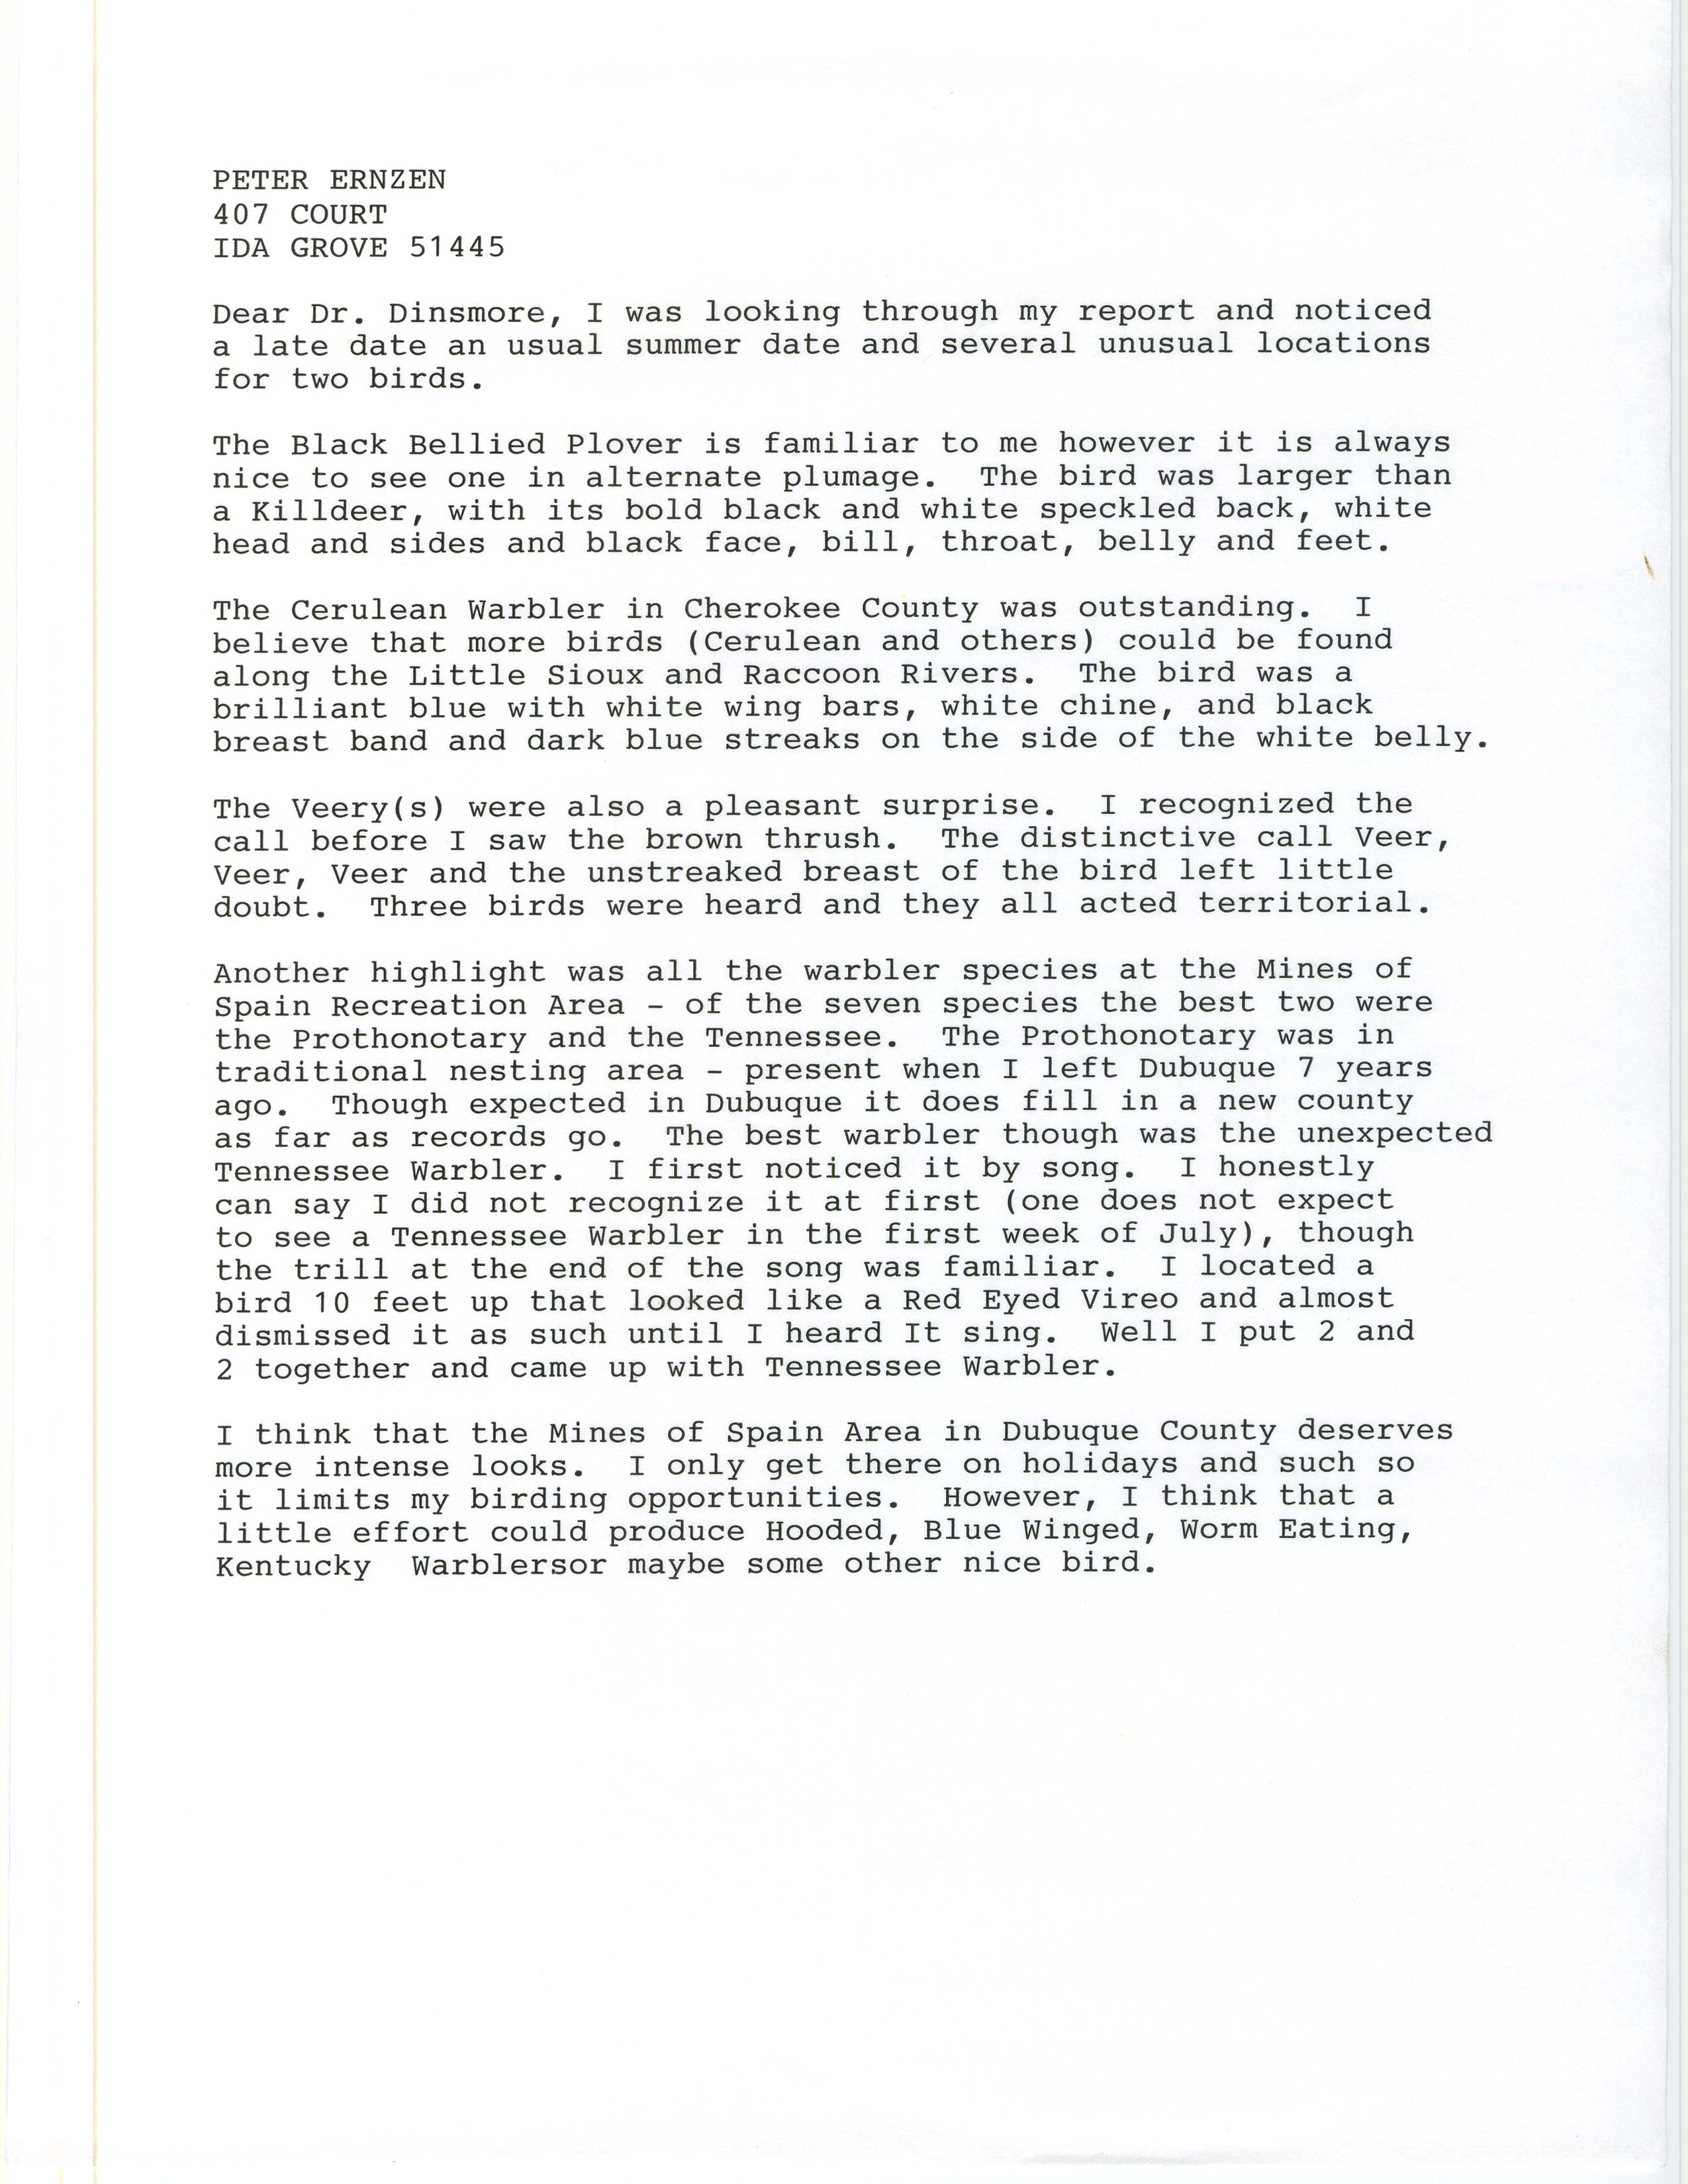 Peter Ernzen letter to James J. Dinsmore regarding summer bird sightings, summer 1997